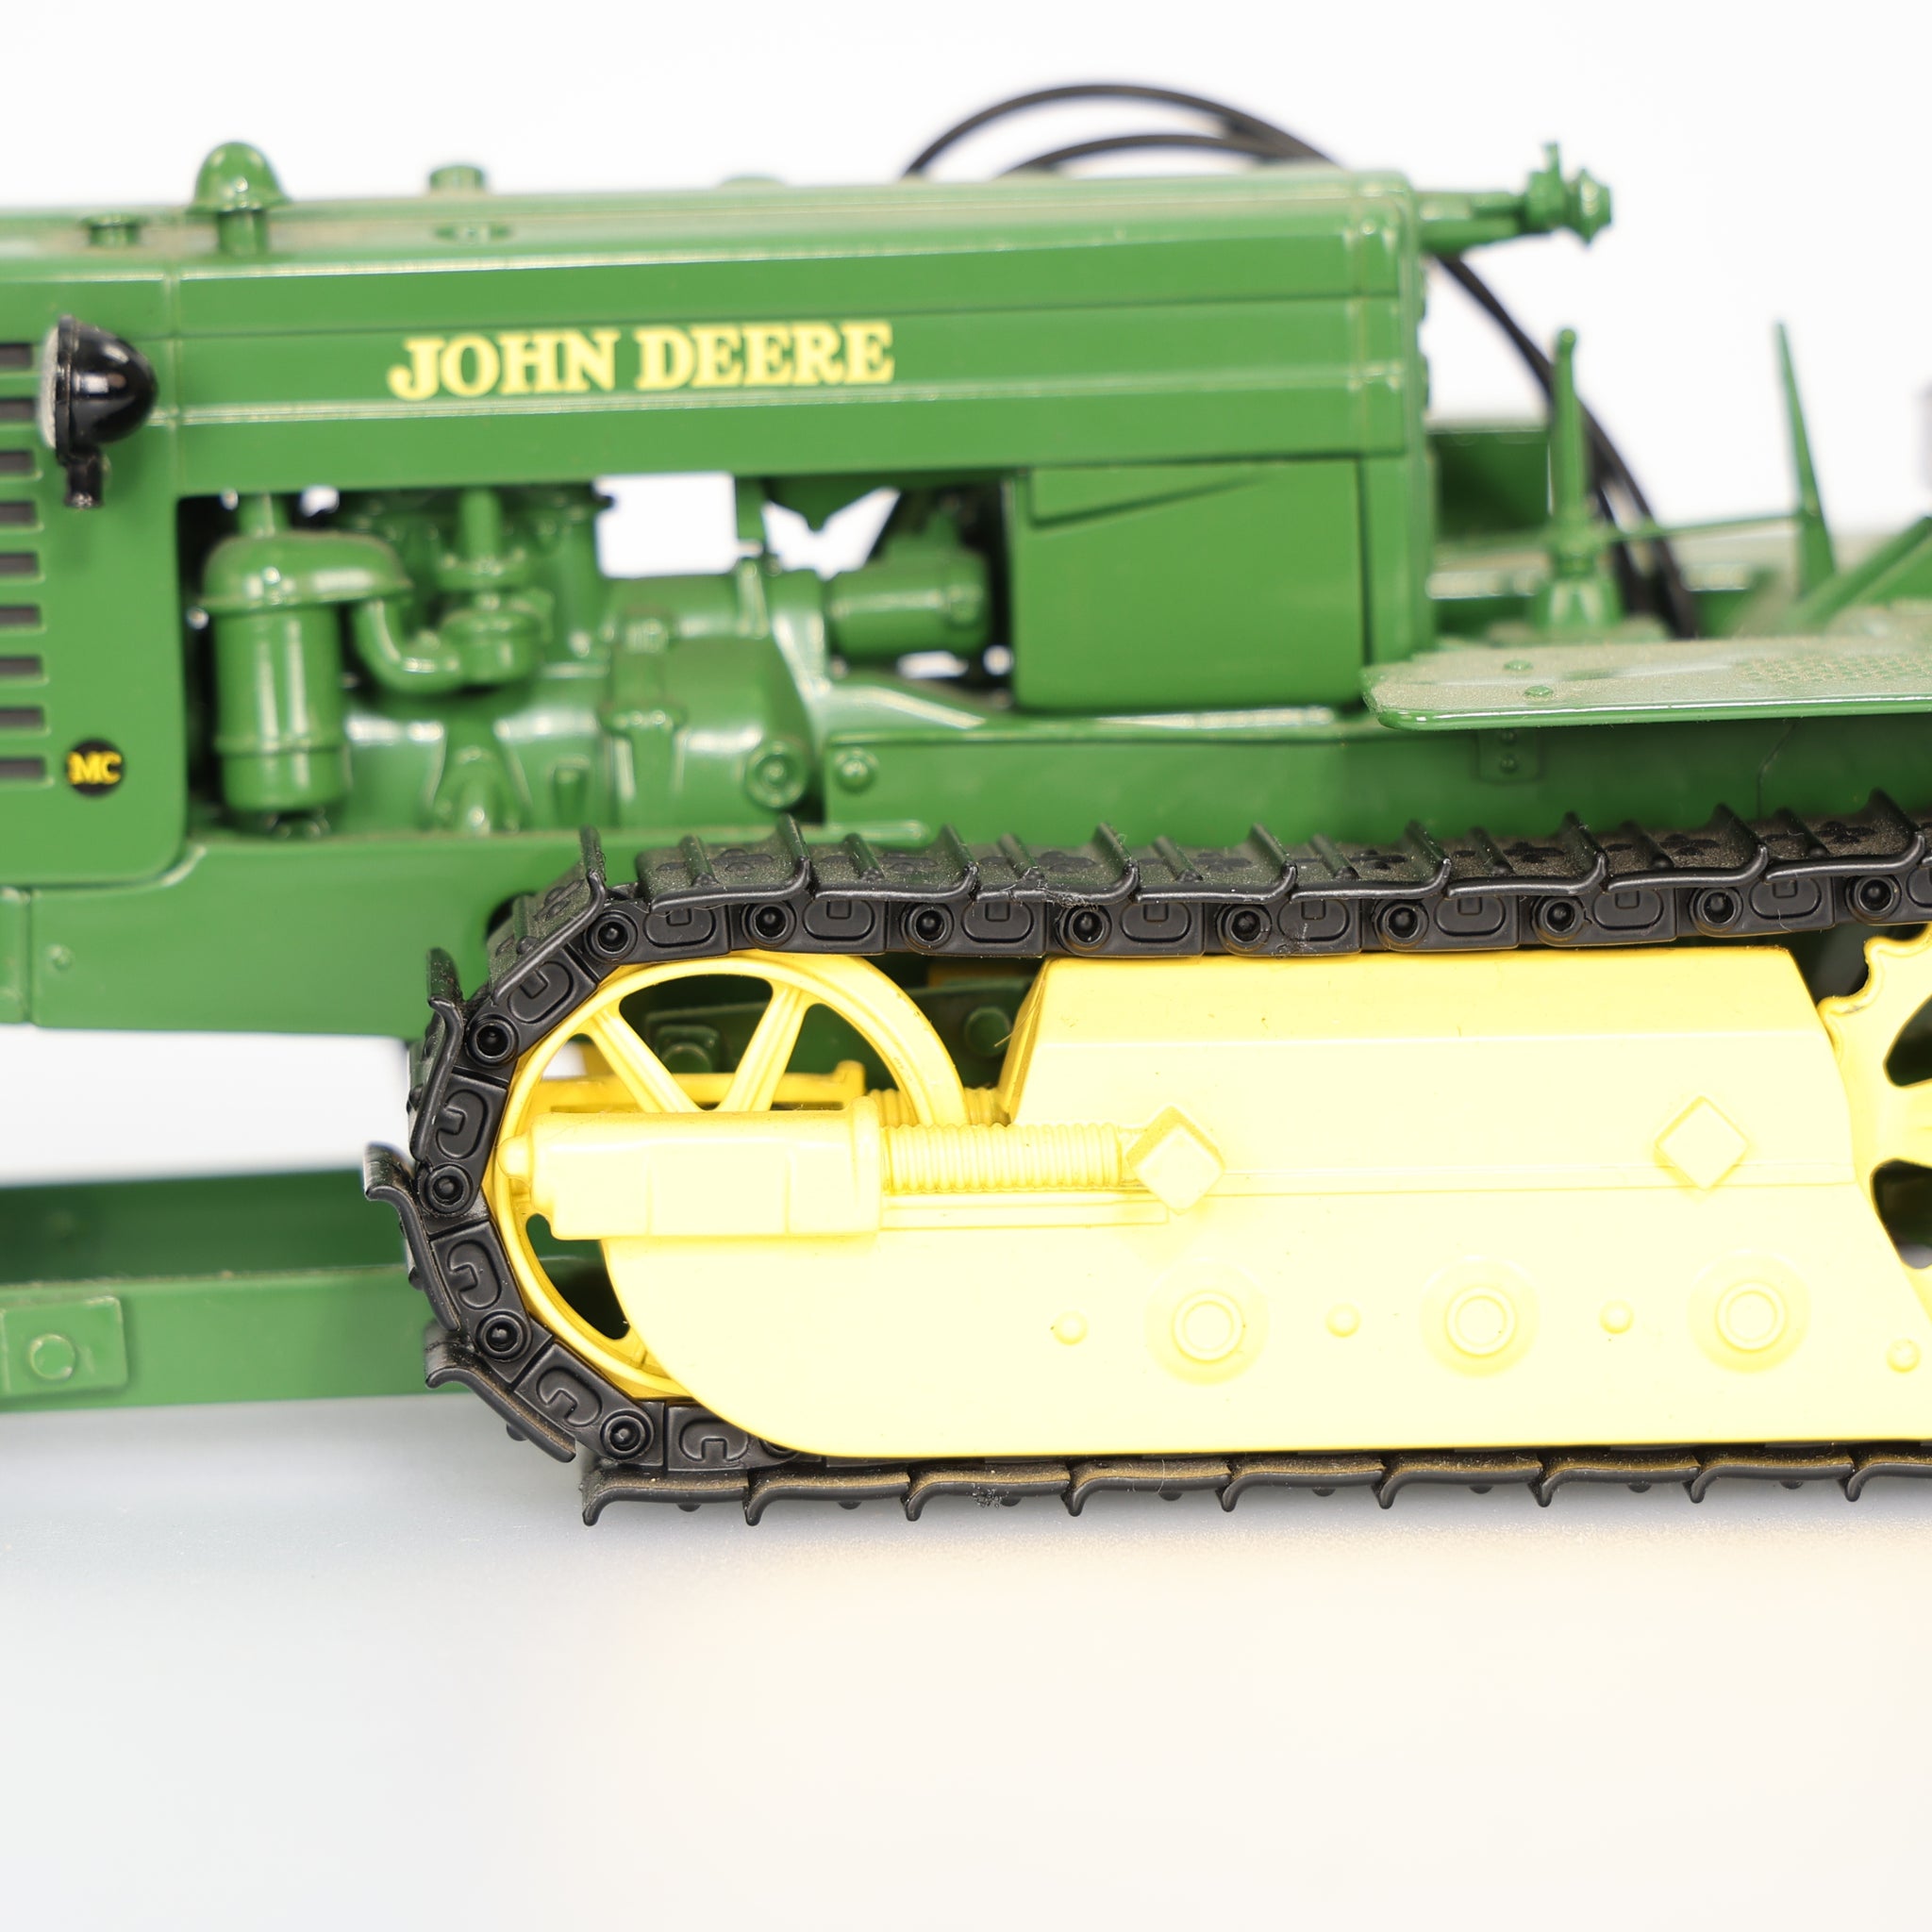 John Deere MC Crawler Tractor w/ Steel Tracks 1:16 Vintage Speccast Jdm-131